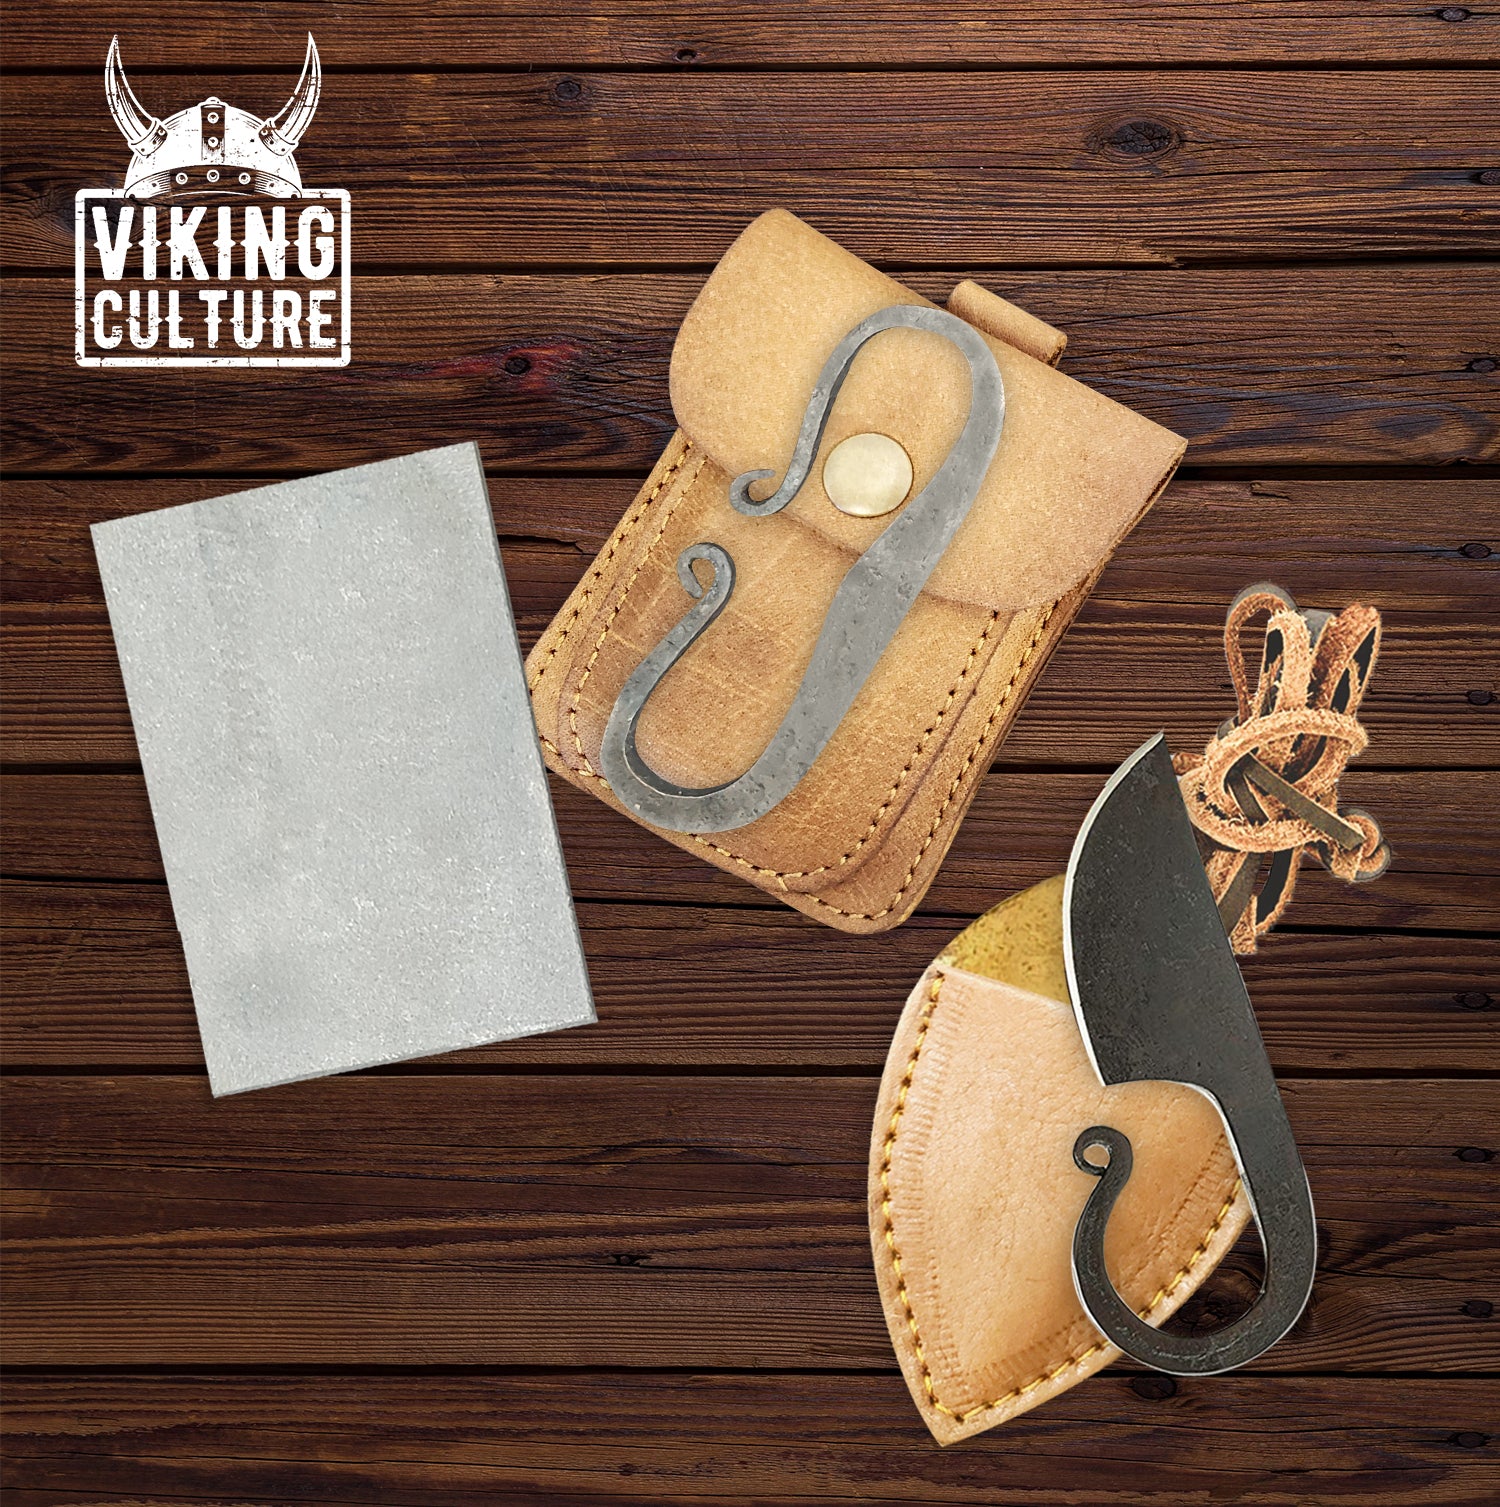 Viking Culture Fire Starter with Survival Knife and Sharpening Stone – 3Pcs Viking Set with 4” Celtic Pocket Knife – Genuine Leather Pocket for Safe Keeping – Premium Craftsmanship